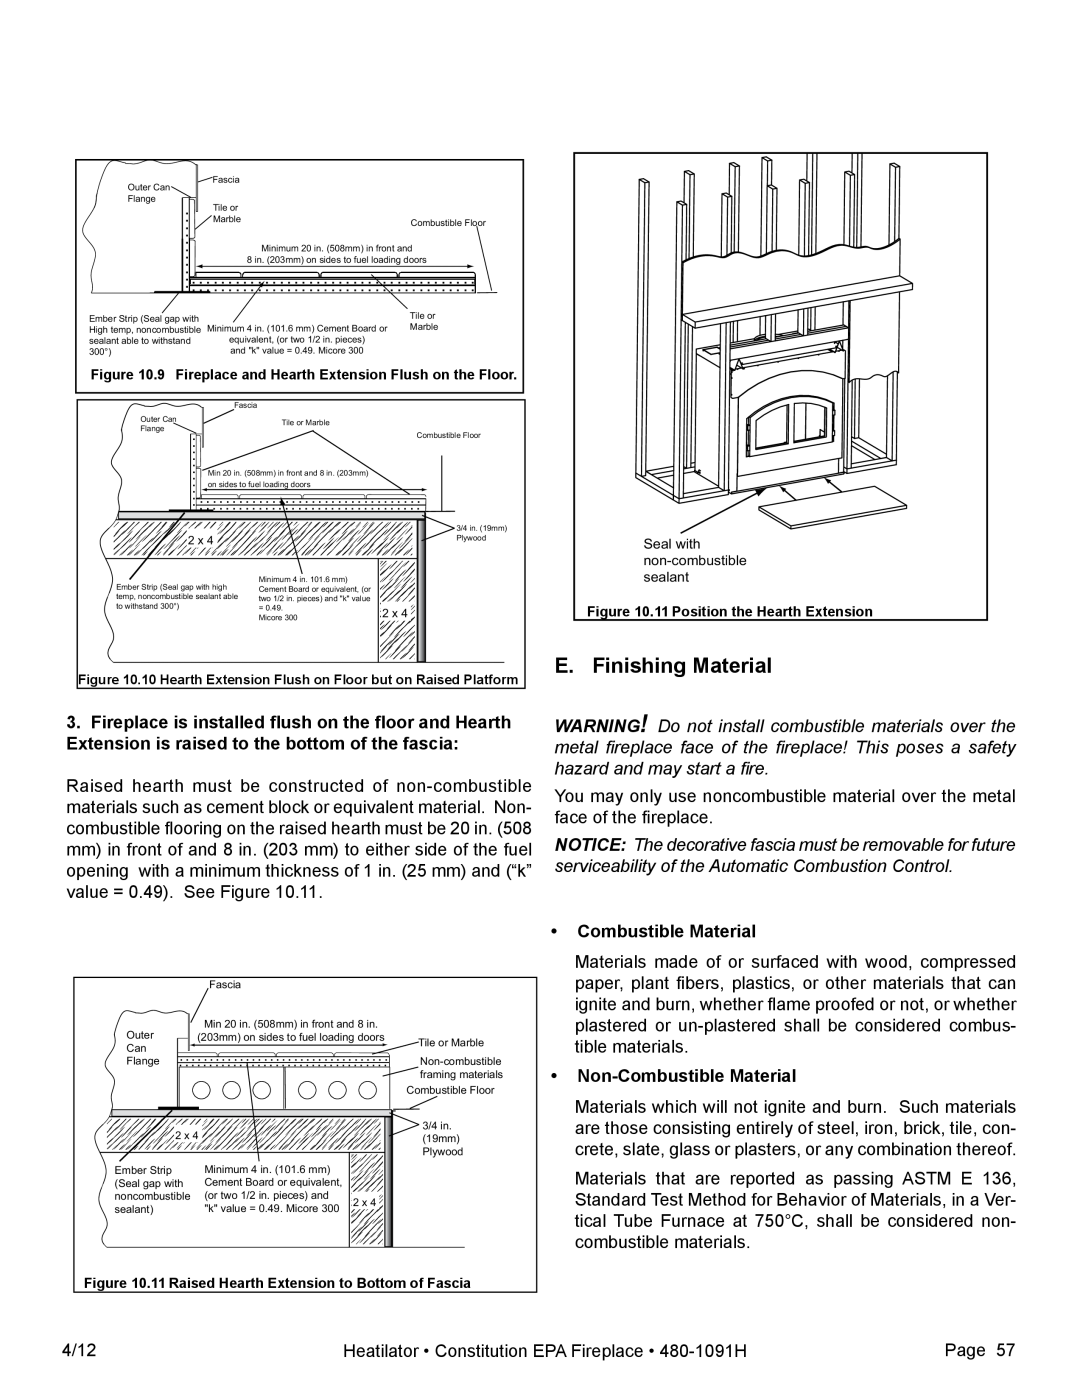 Heatiator C40 owner manual E. Finishing Material, •Combustible Material, •Non-CombustibleMaterial 